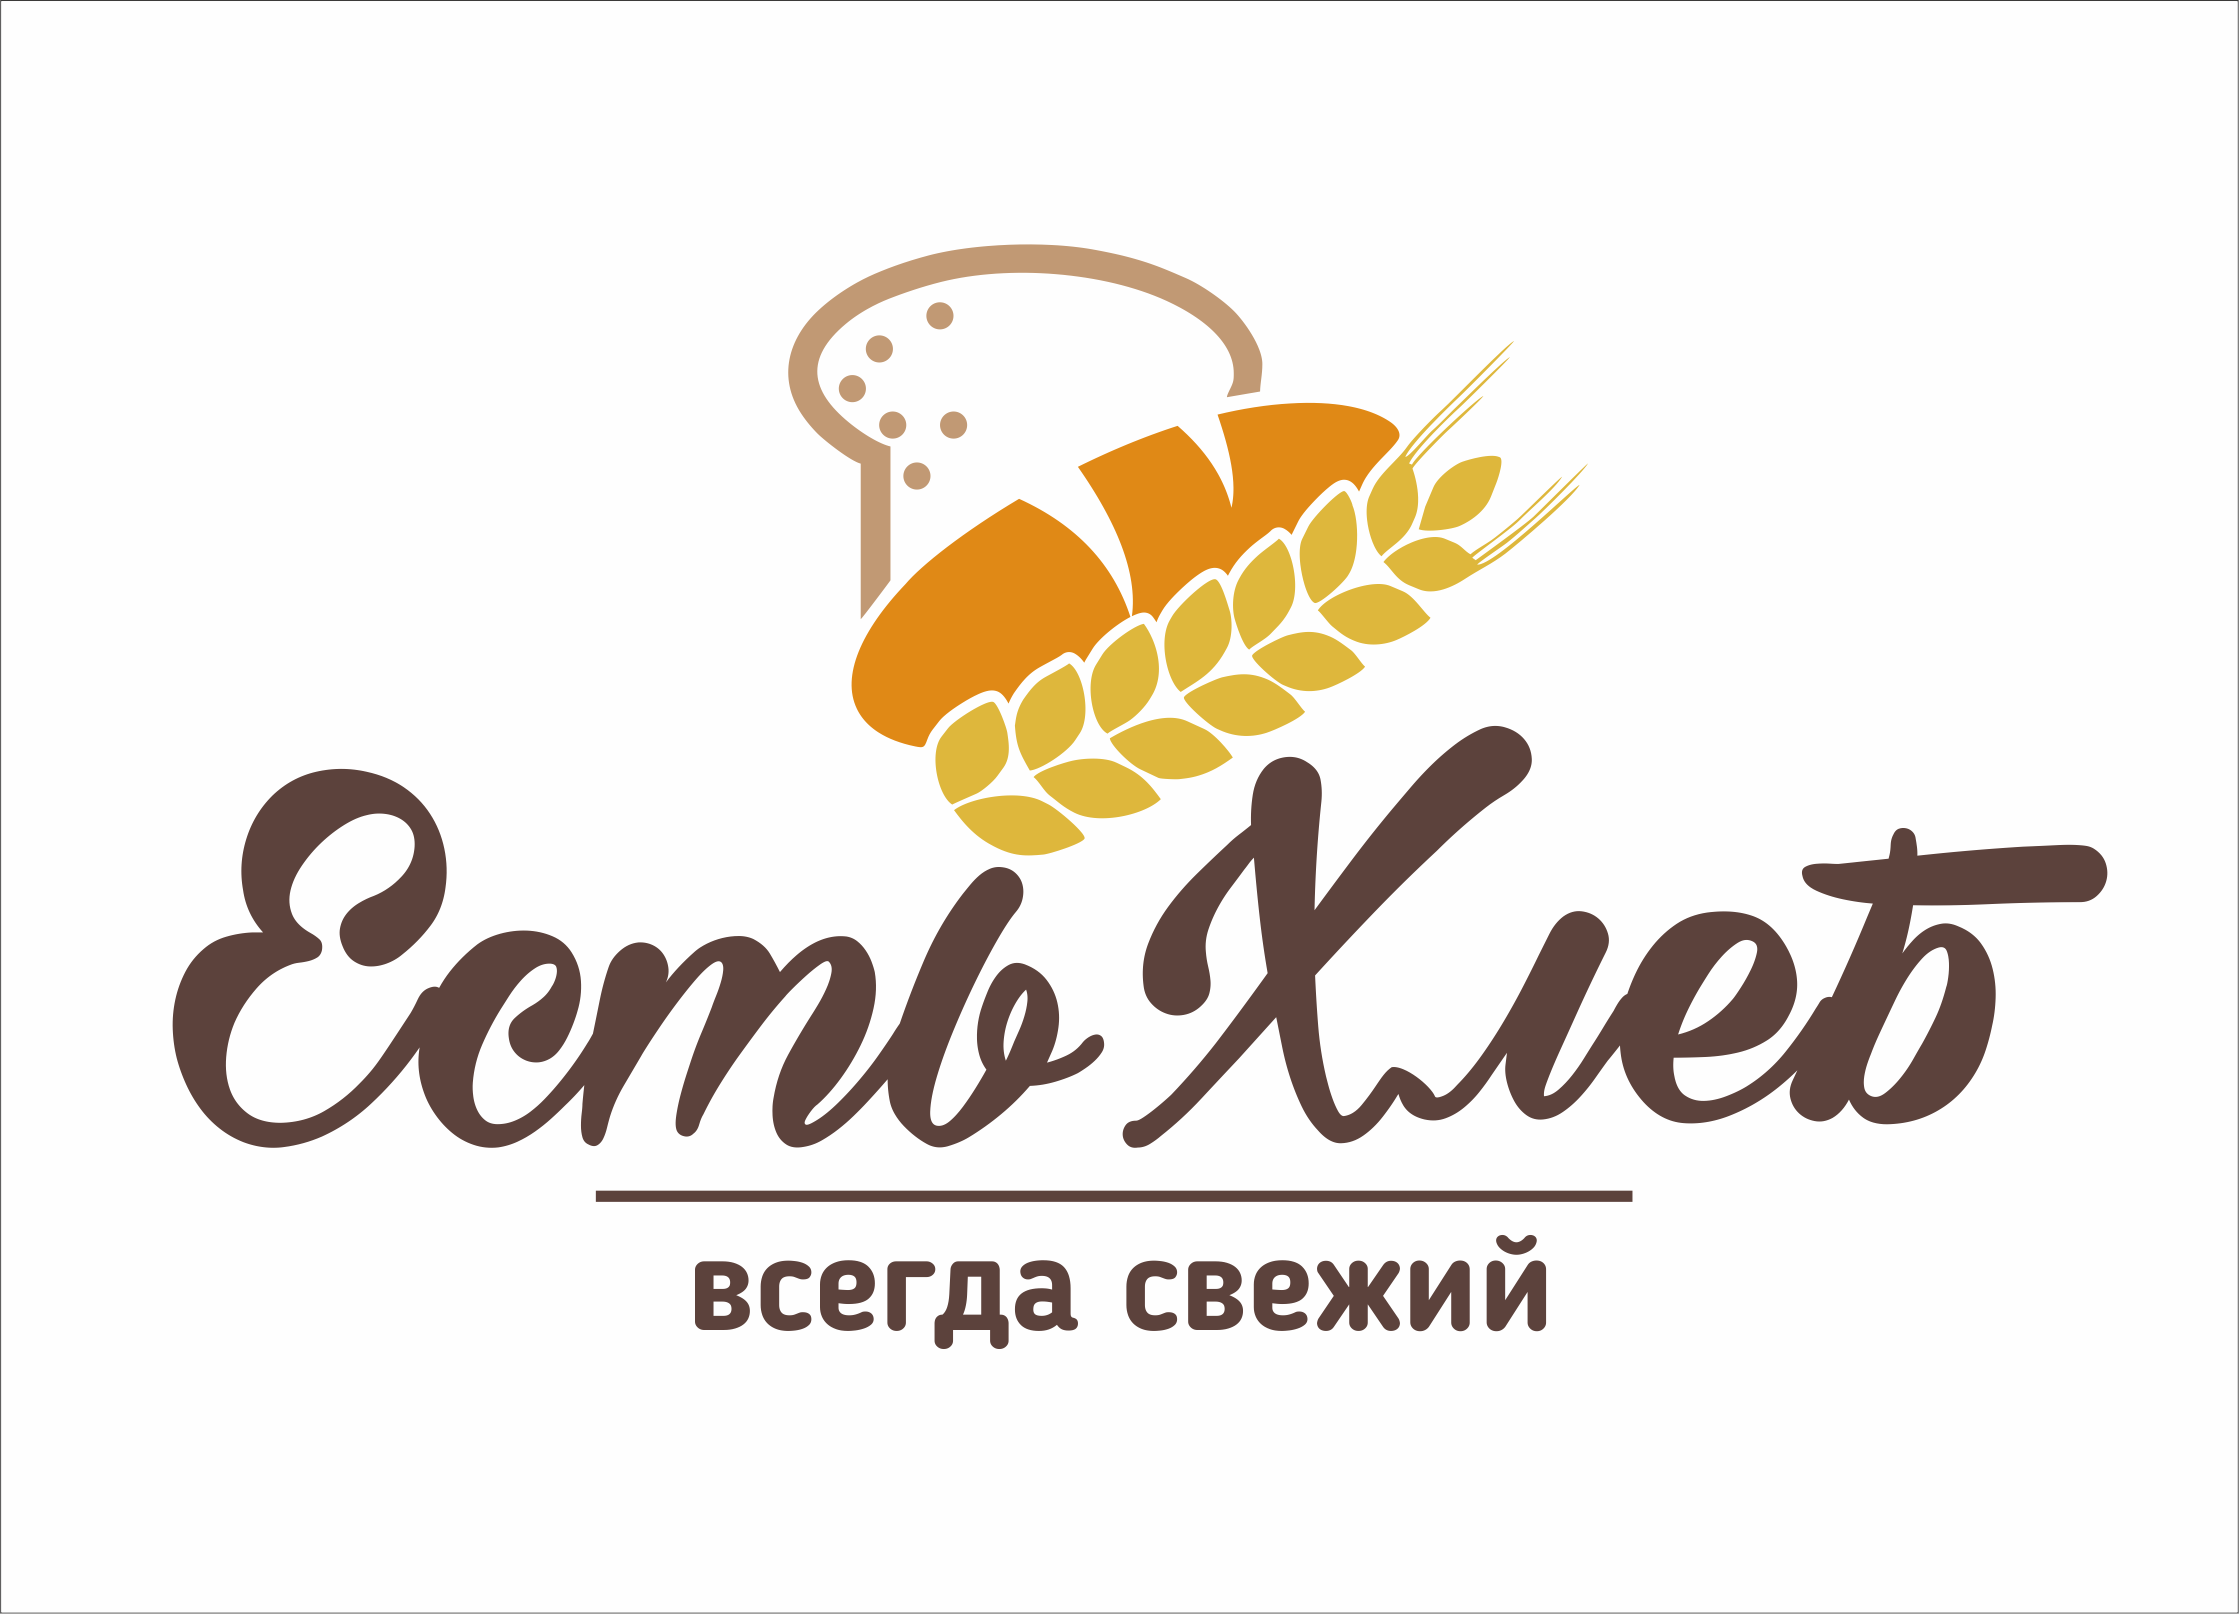 Логотип булочной. Булочная надпись. Пекарня лого. Логотип хлебобулочных изделий.